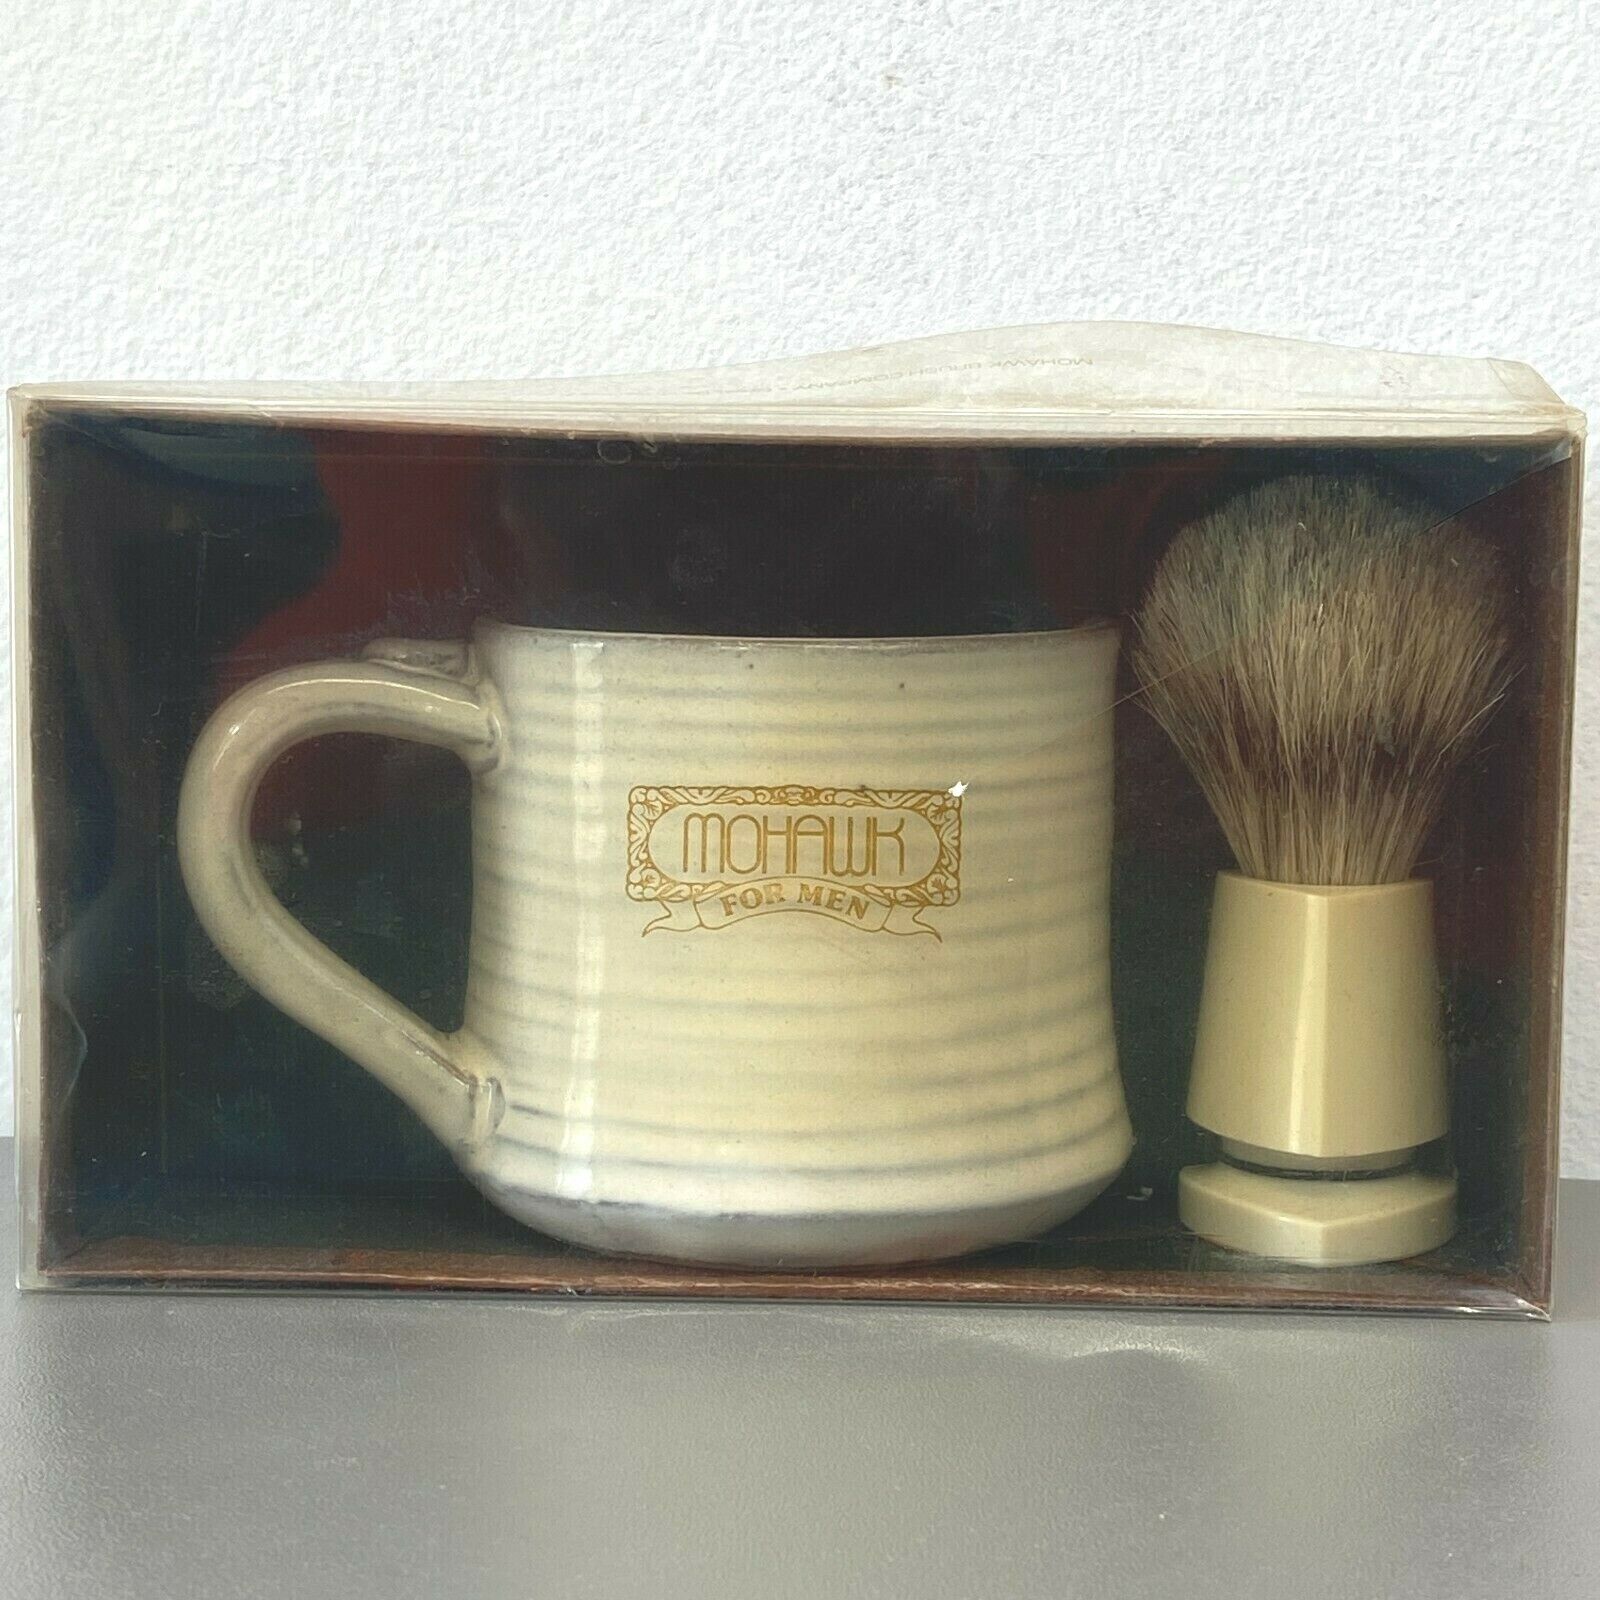 Mohawk Shaving Mug Soap and Brush Set in Box Vintage Unused HB